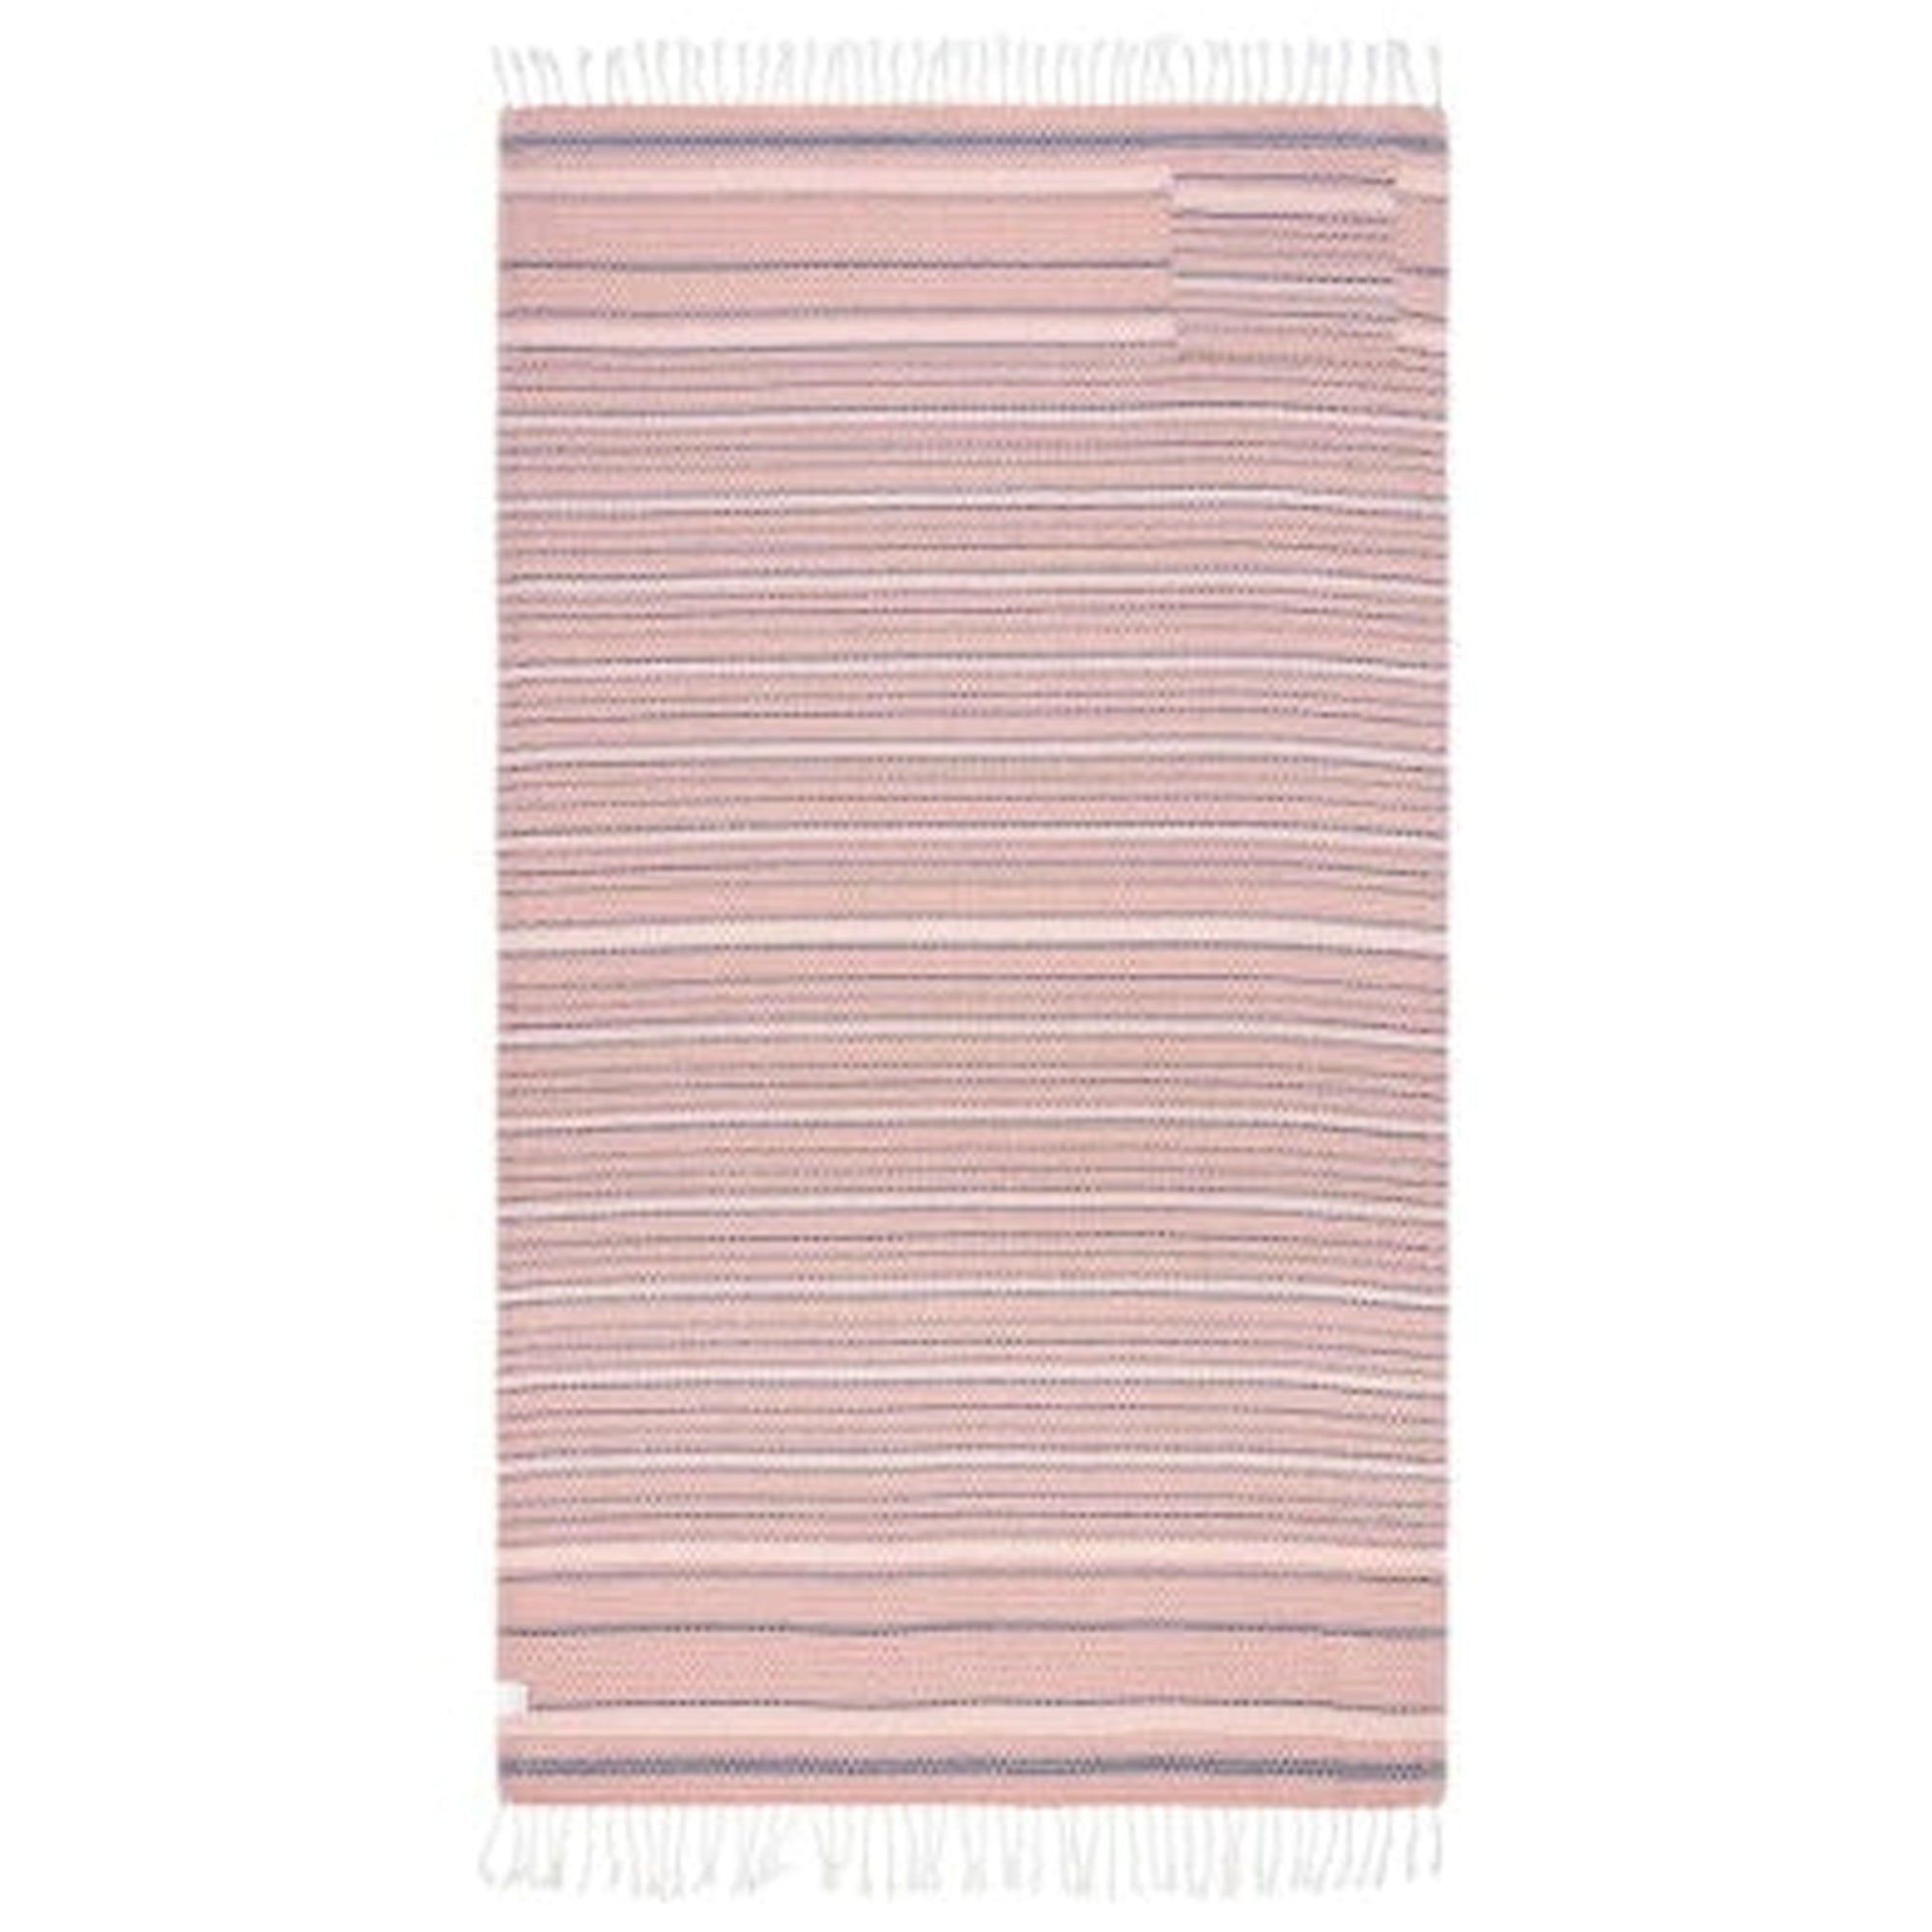 Sand Cloud Panama Stripe w/ Zipper Pocket Towel